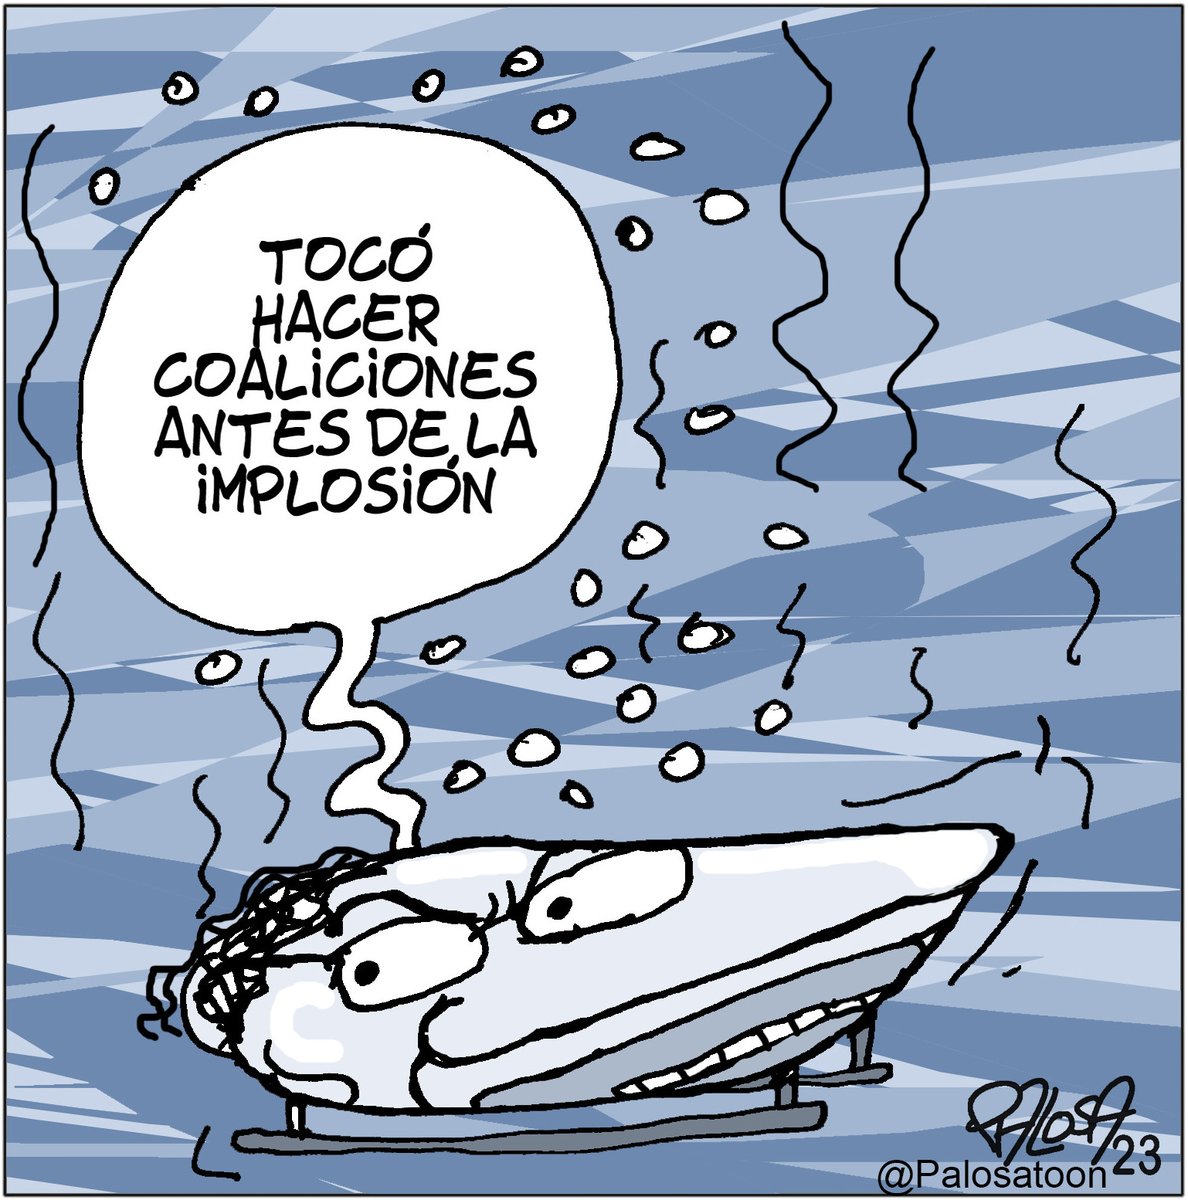 REFORMAS PETRITÁN
#Reformas #Coaliciones #SubmarinoTitan #Titanic #TitanImplosion #GustavoPetro